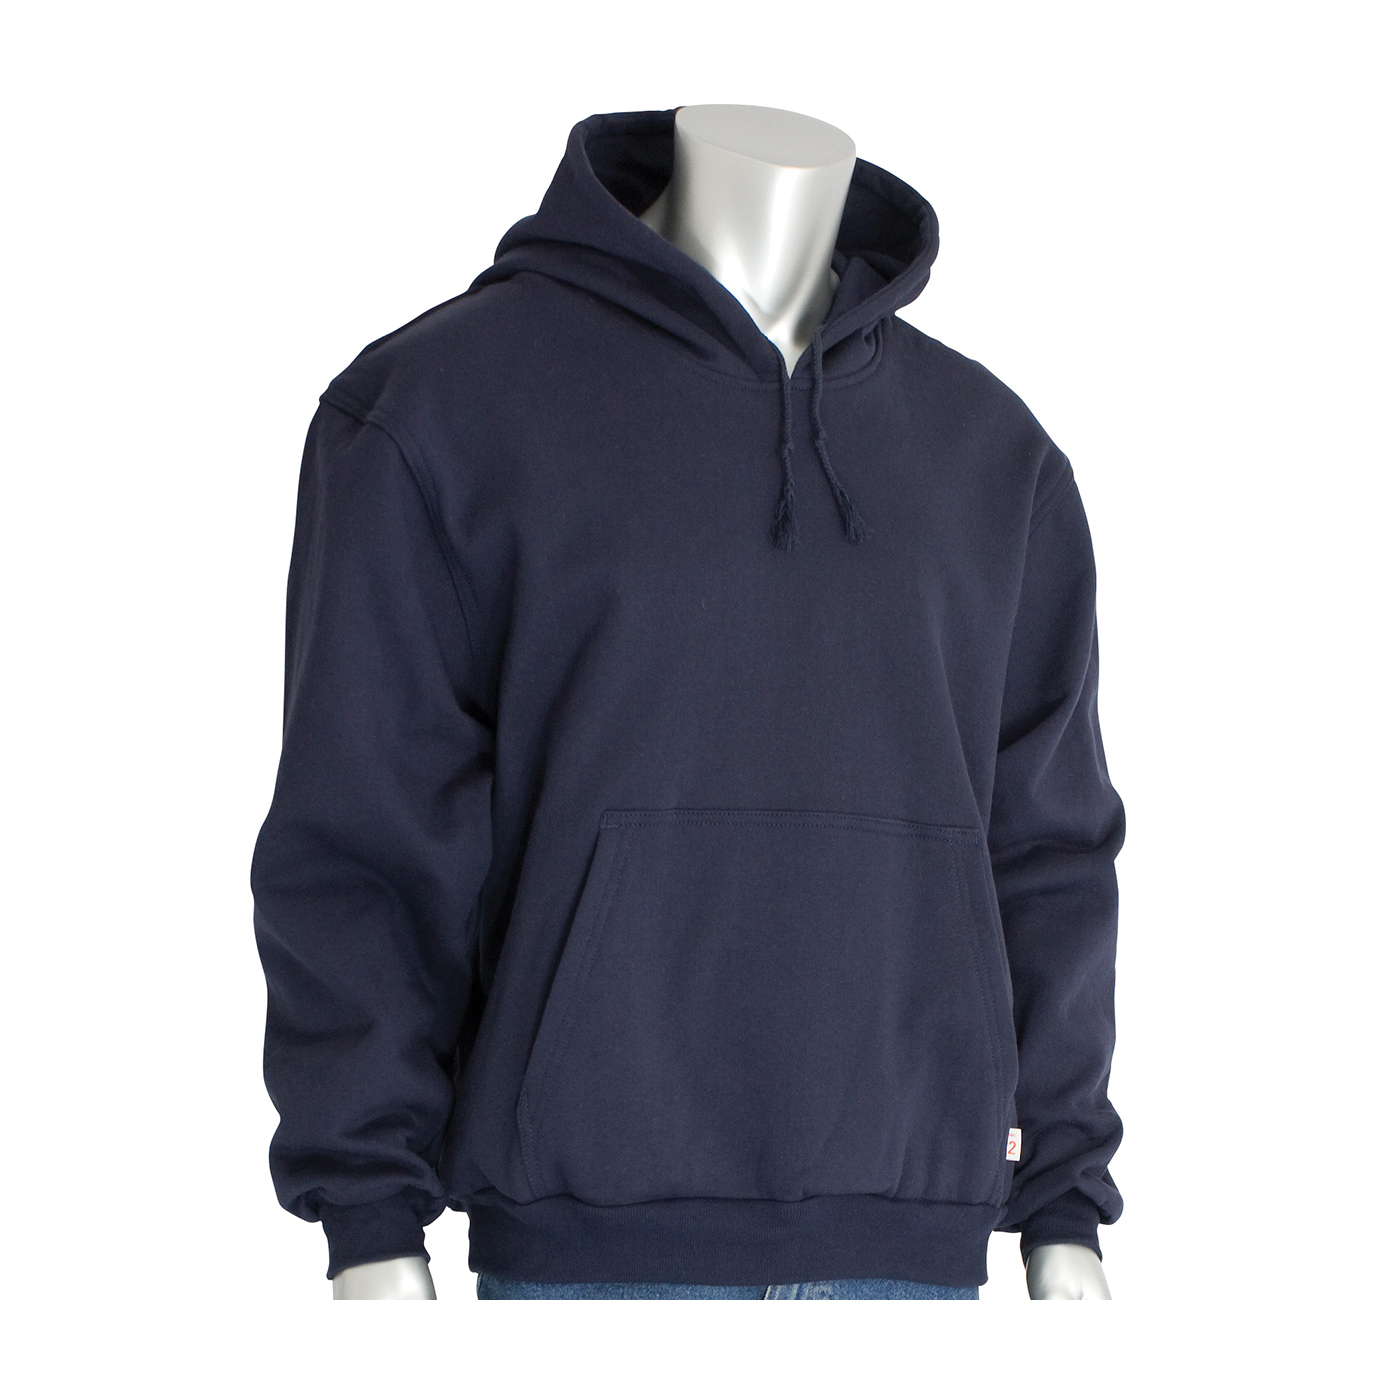 PIP® 385-FRPH-NV/L Polartec® 385-FRPH Arc and Flame Resistant Sweatshirt, L, Navy, FR Fleece Knit/100% Cotton, 31 in Regular, 32 in Tall L